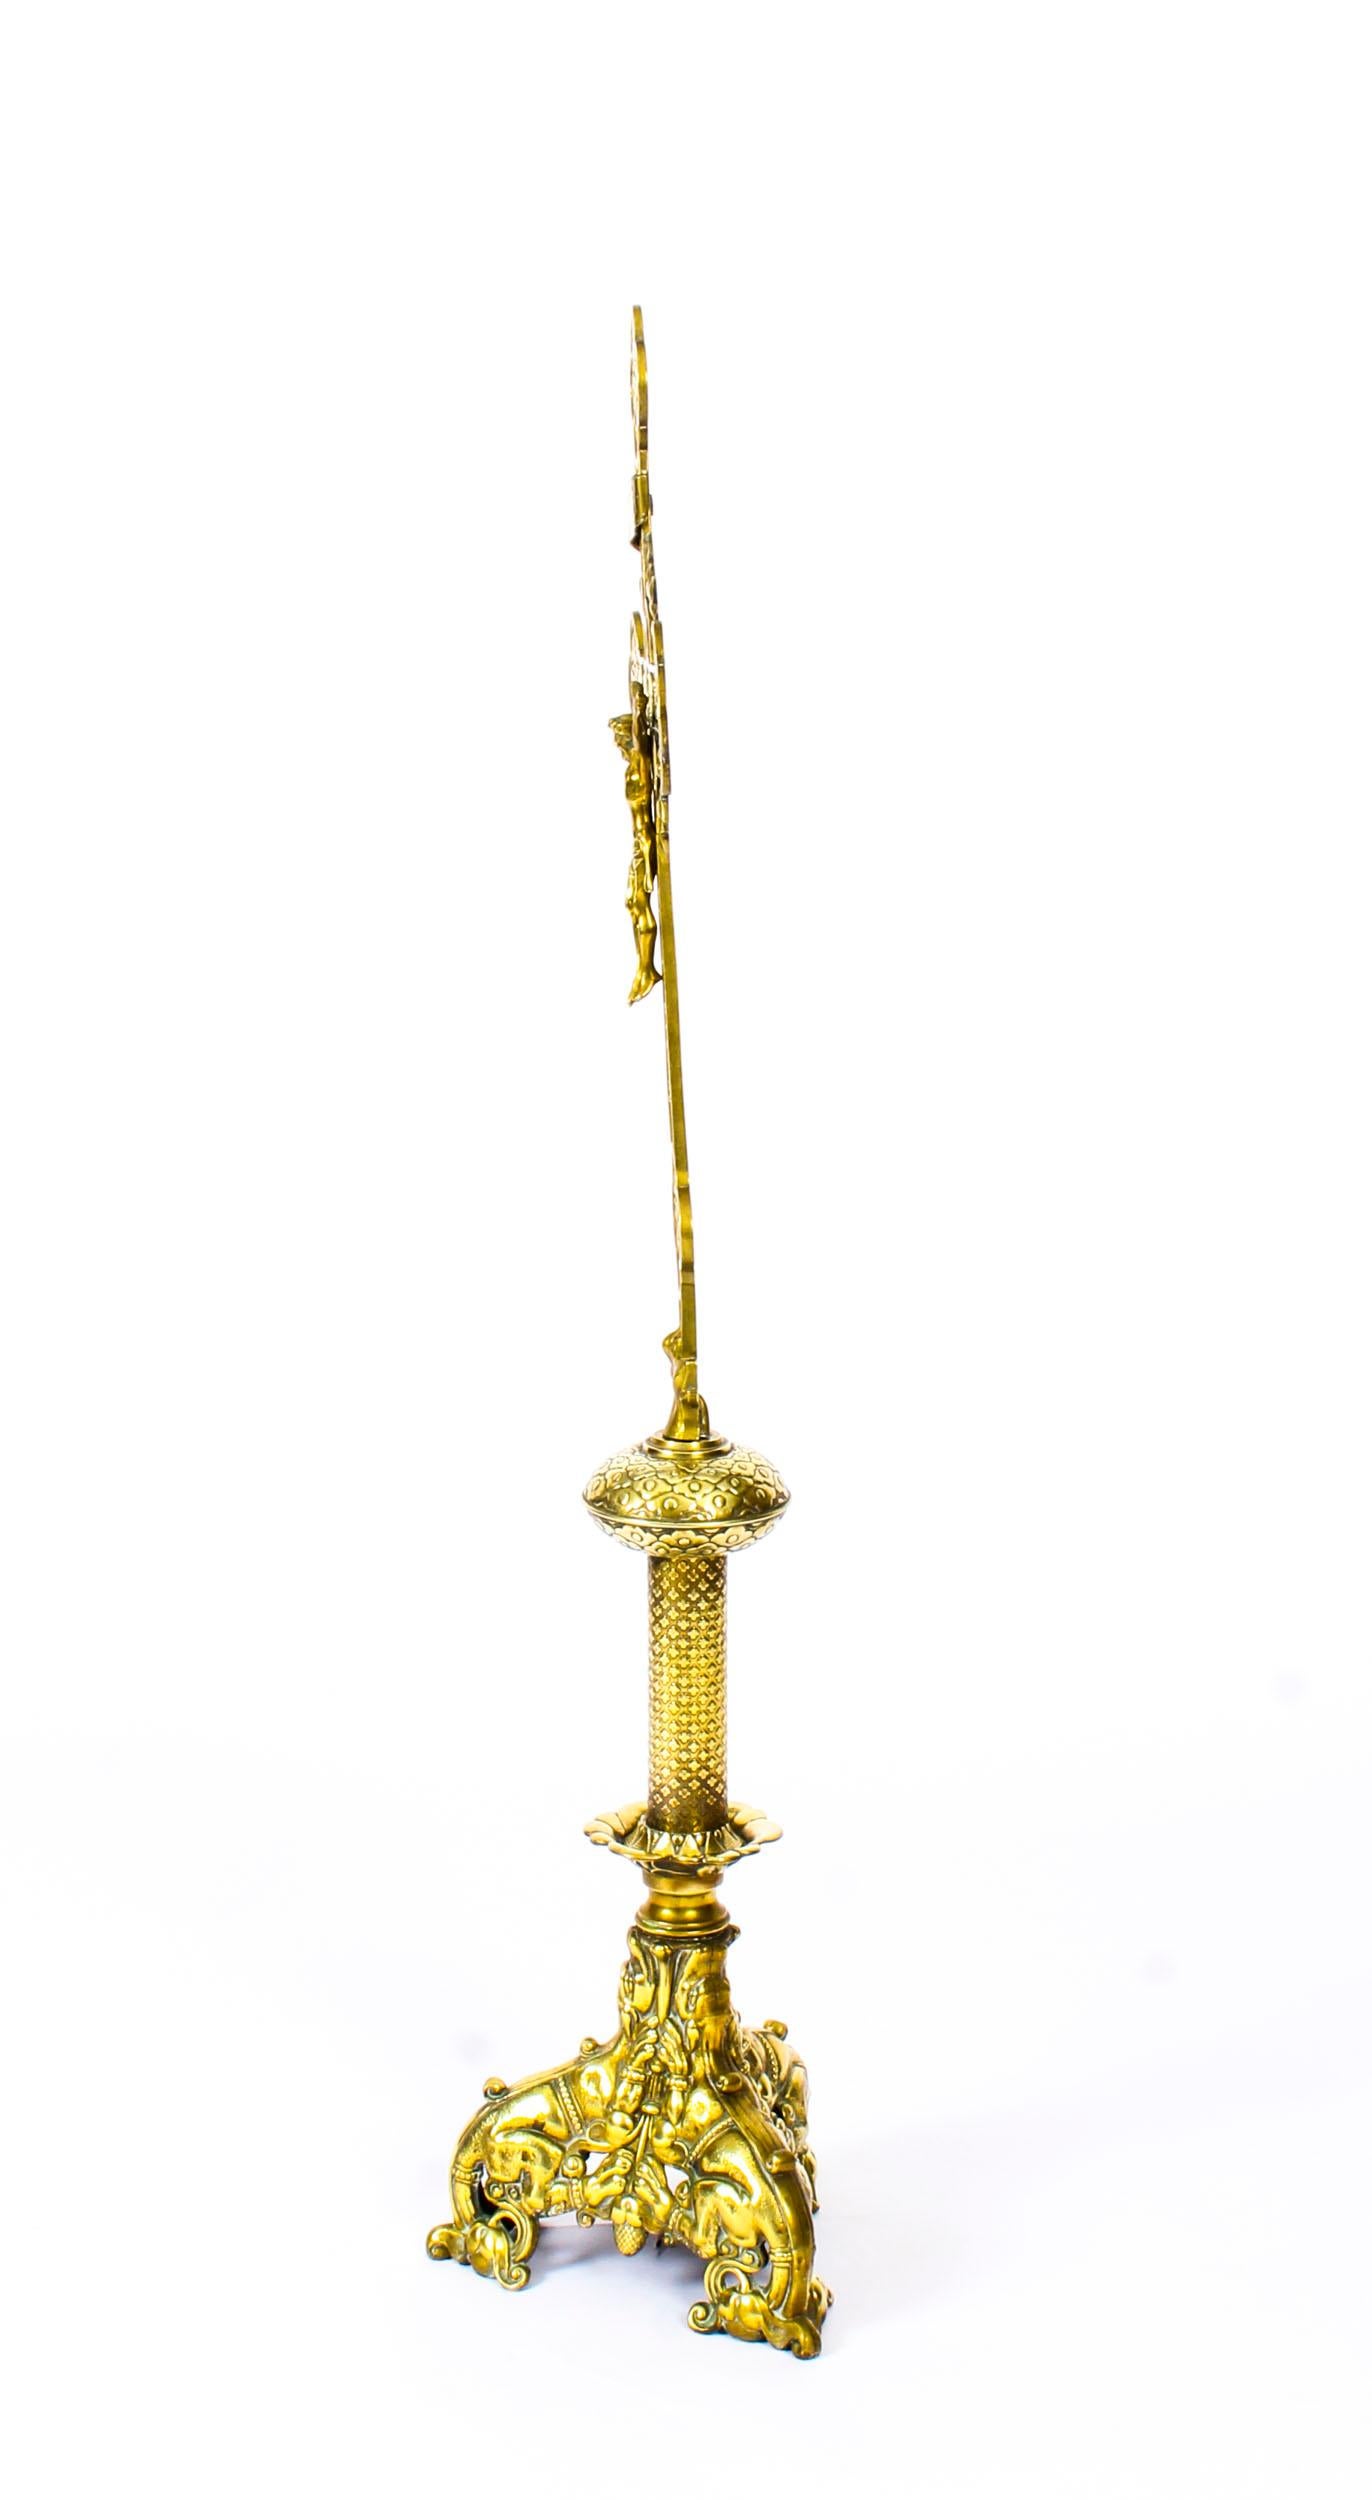 1mt Brass Medieval Revival Altar Corpus Christi Christ Crucified 19th Century 2